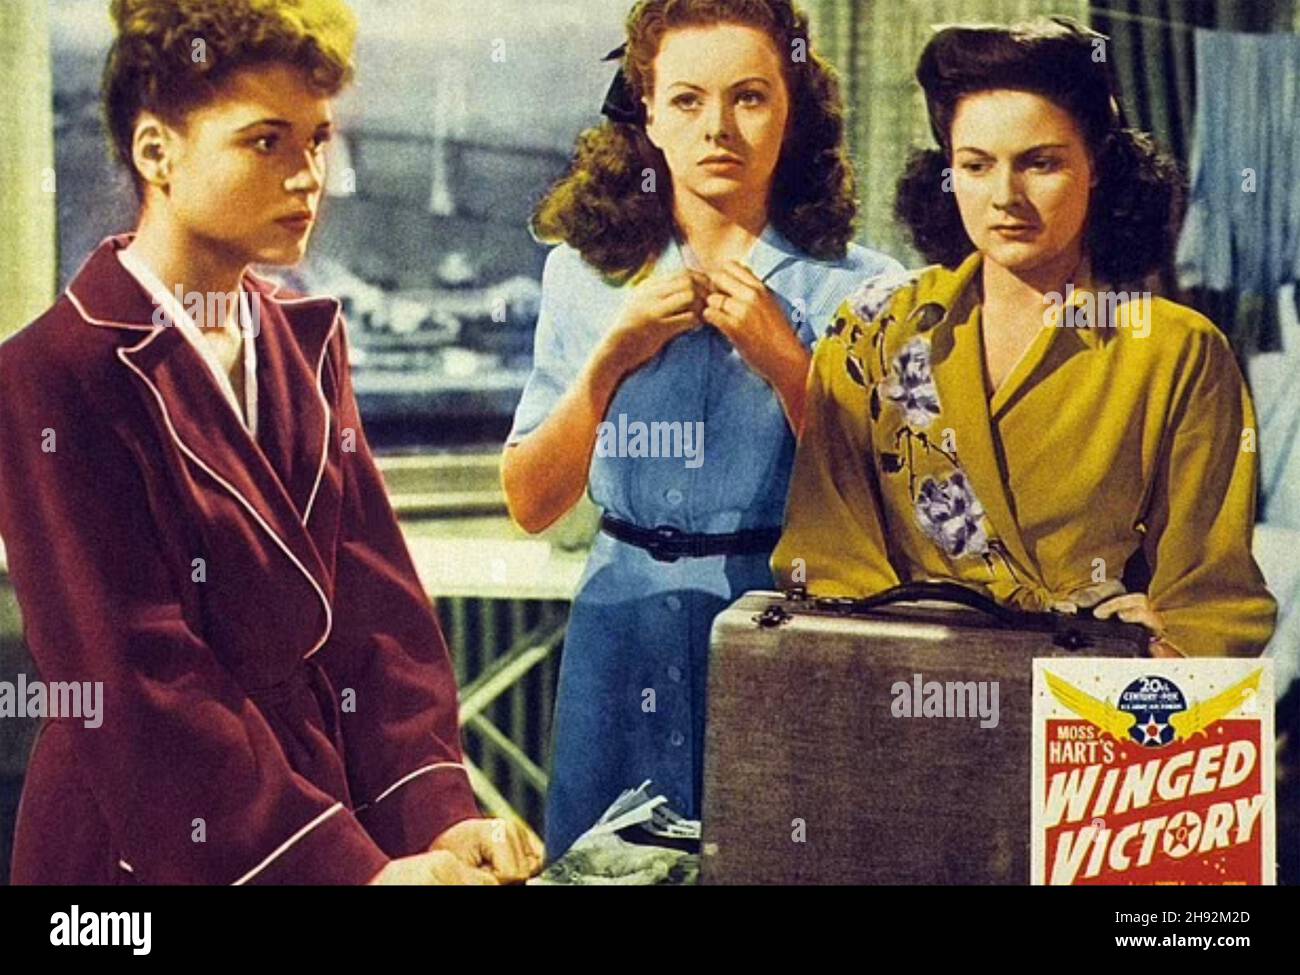 WINGED VICTORY 1944 20th Century Fox film con da sinistra: Judy Holliday, Jeanne Crain, Jo-Carroll Dennison. Foto Stock